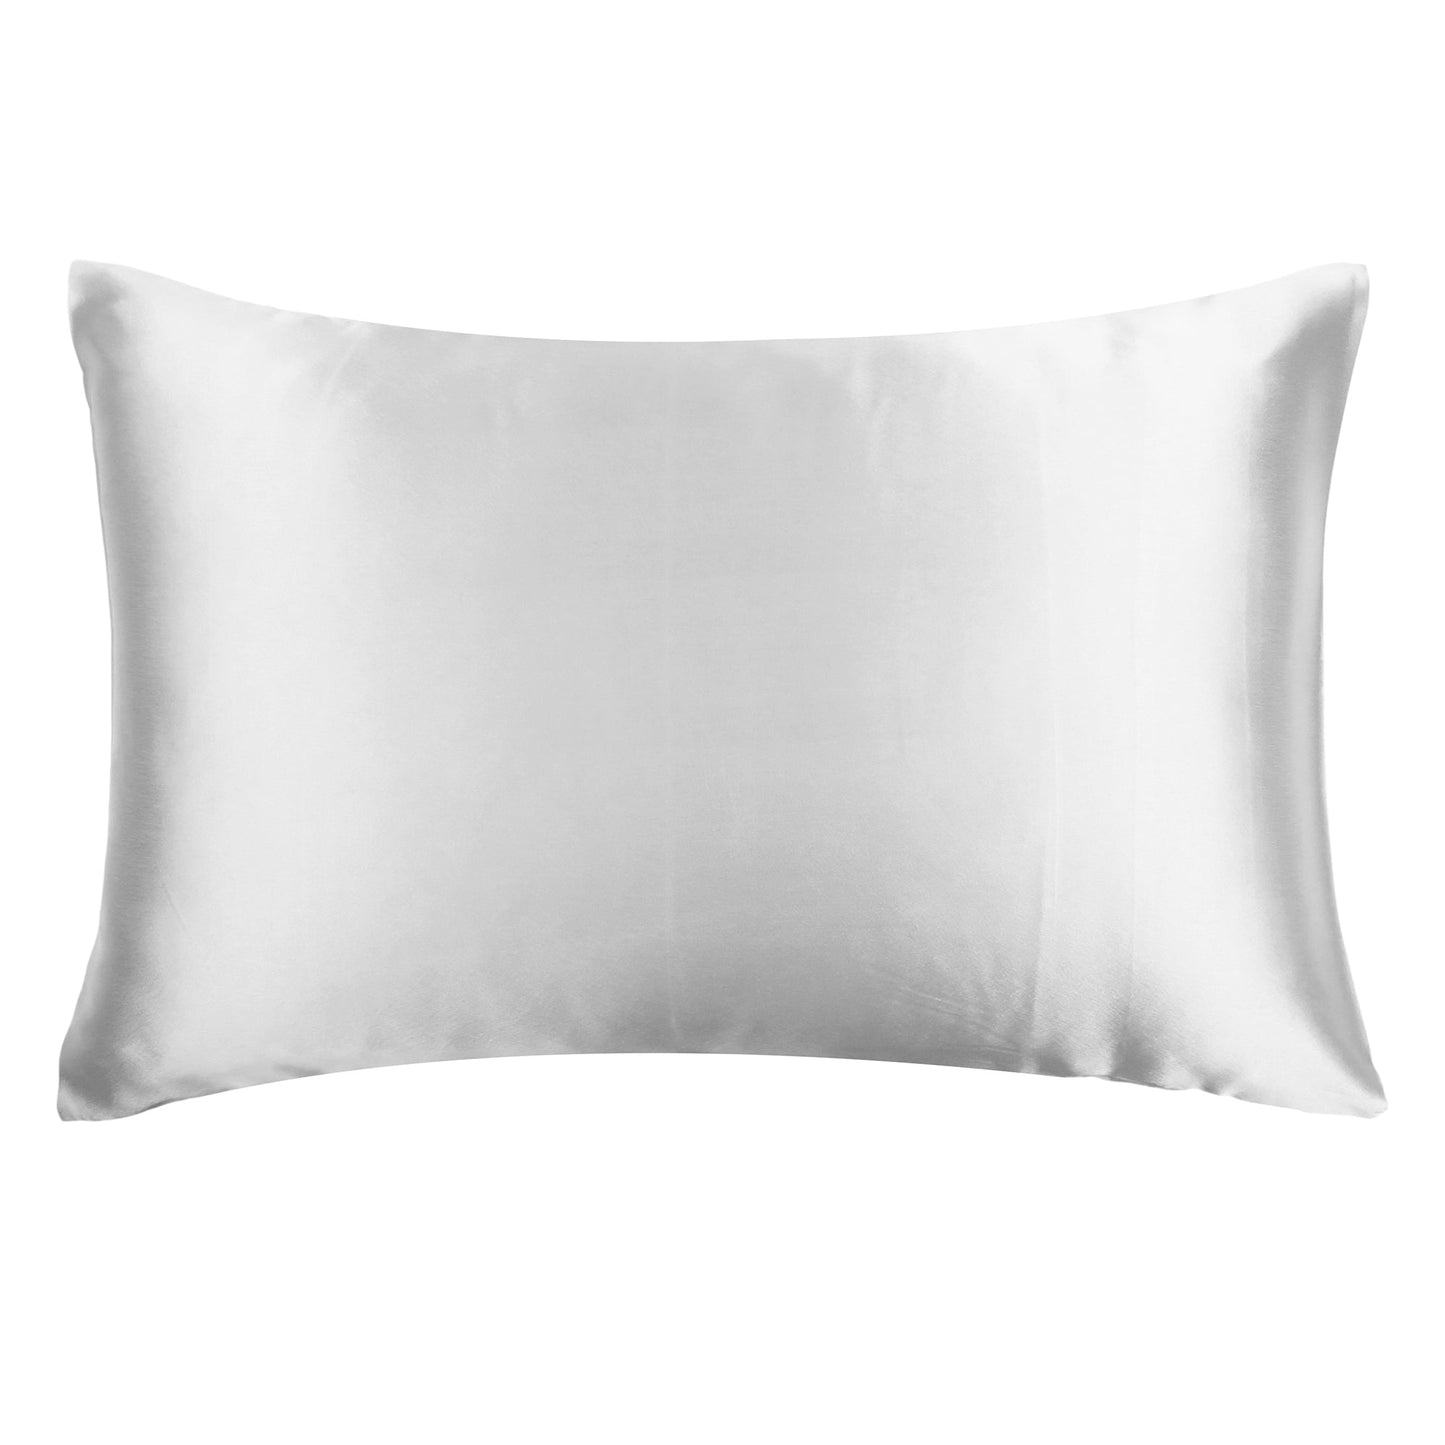 Luxury Soft Plain Satin Silk Pillowcases in Set of 2 - Silver Gray